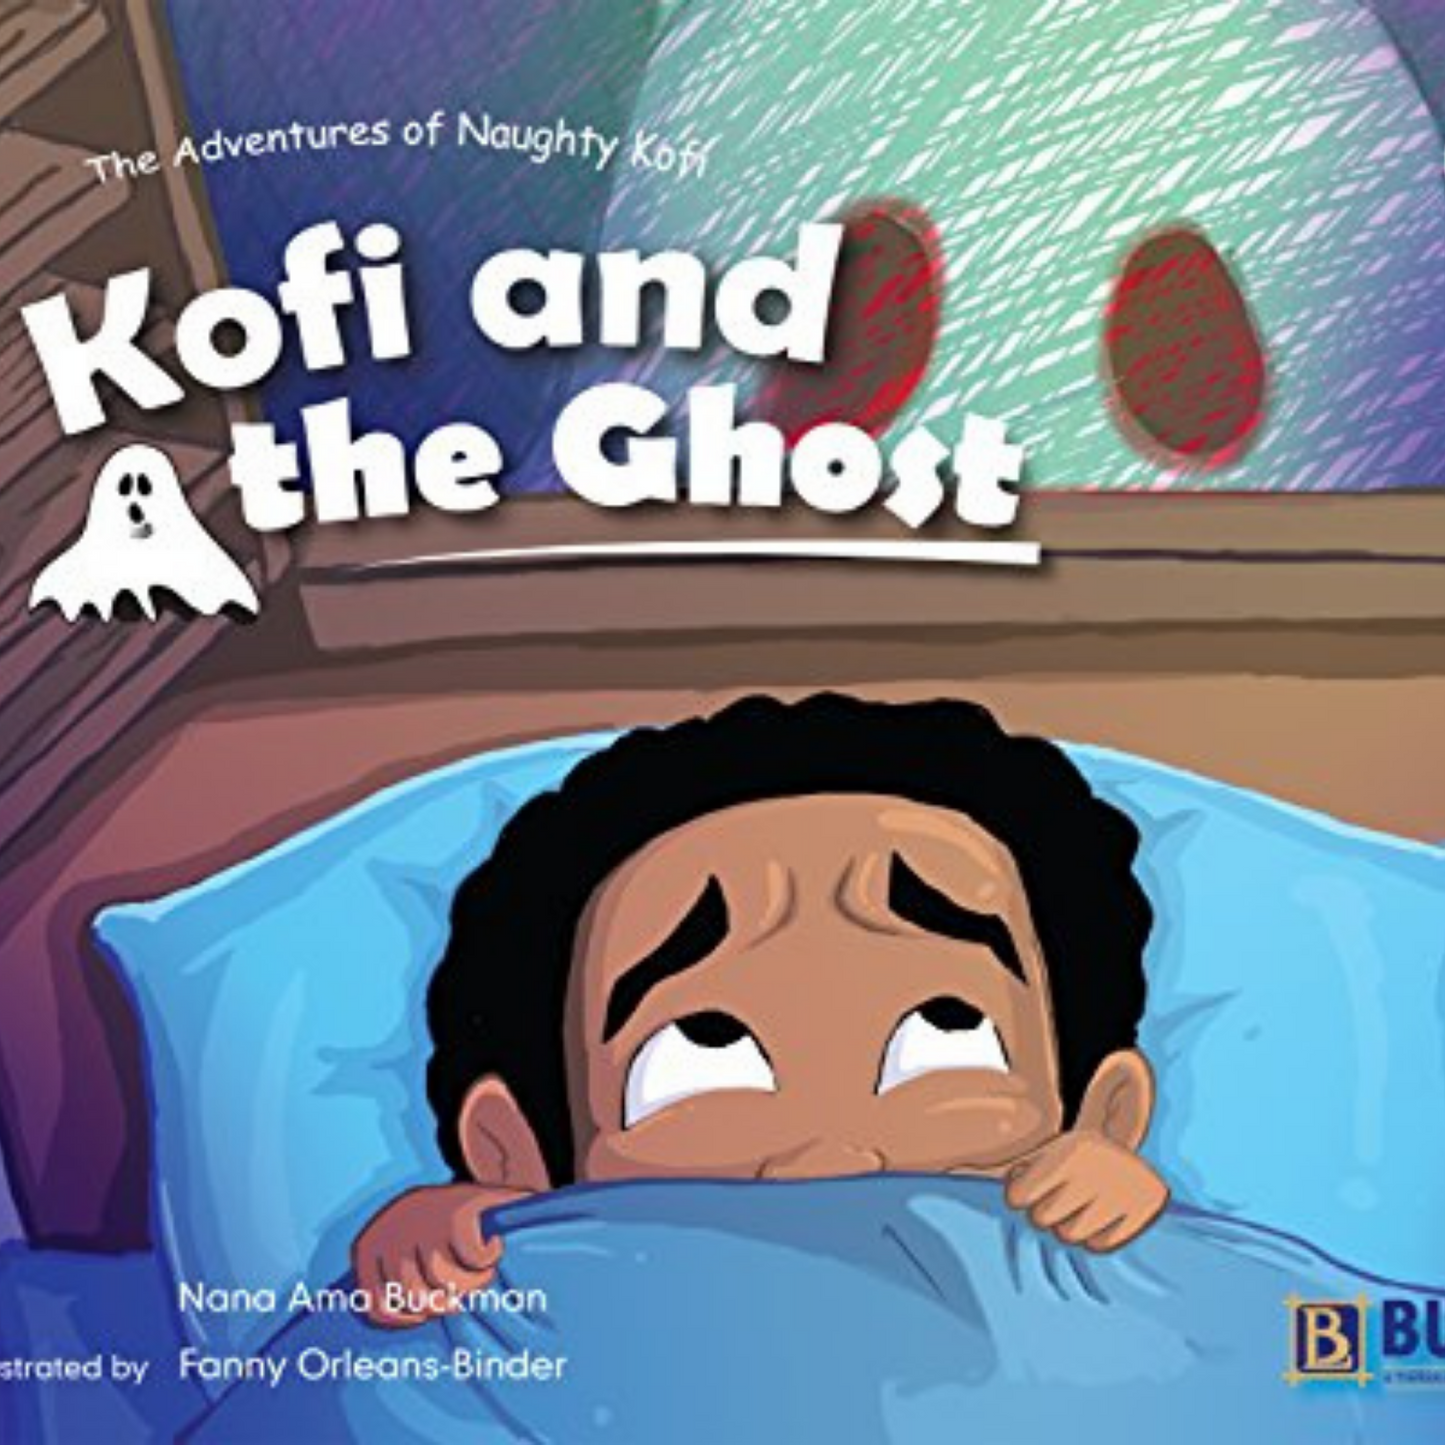 Kofi and the ghost